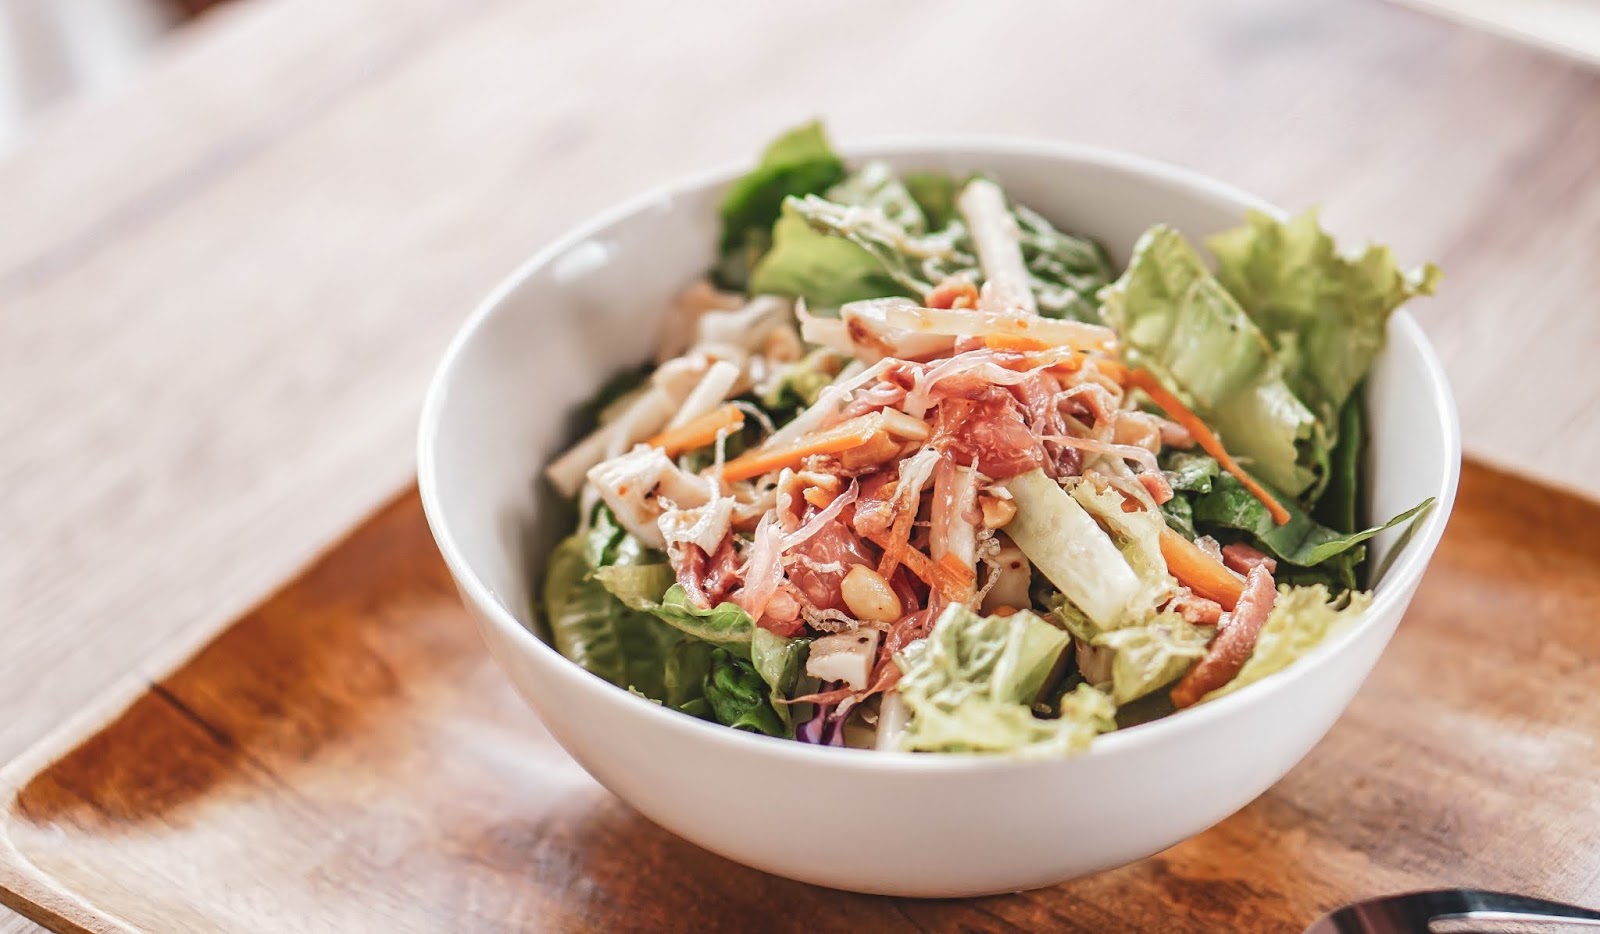 Healthy Food On-the-Go at Jar’d In Salad House, Jardin SalaD house, salad bar, vegetable from Baguio, organic green salad